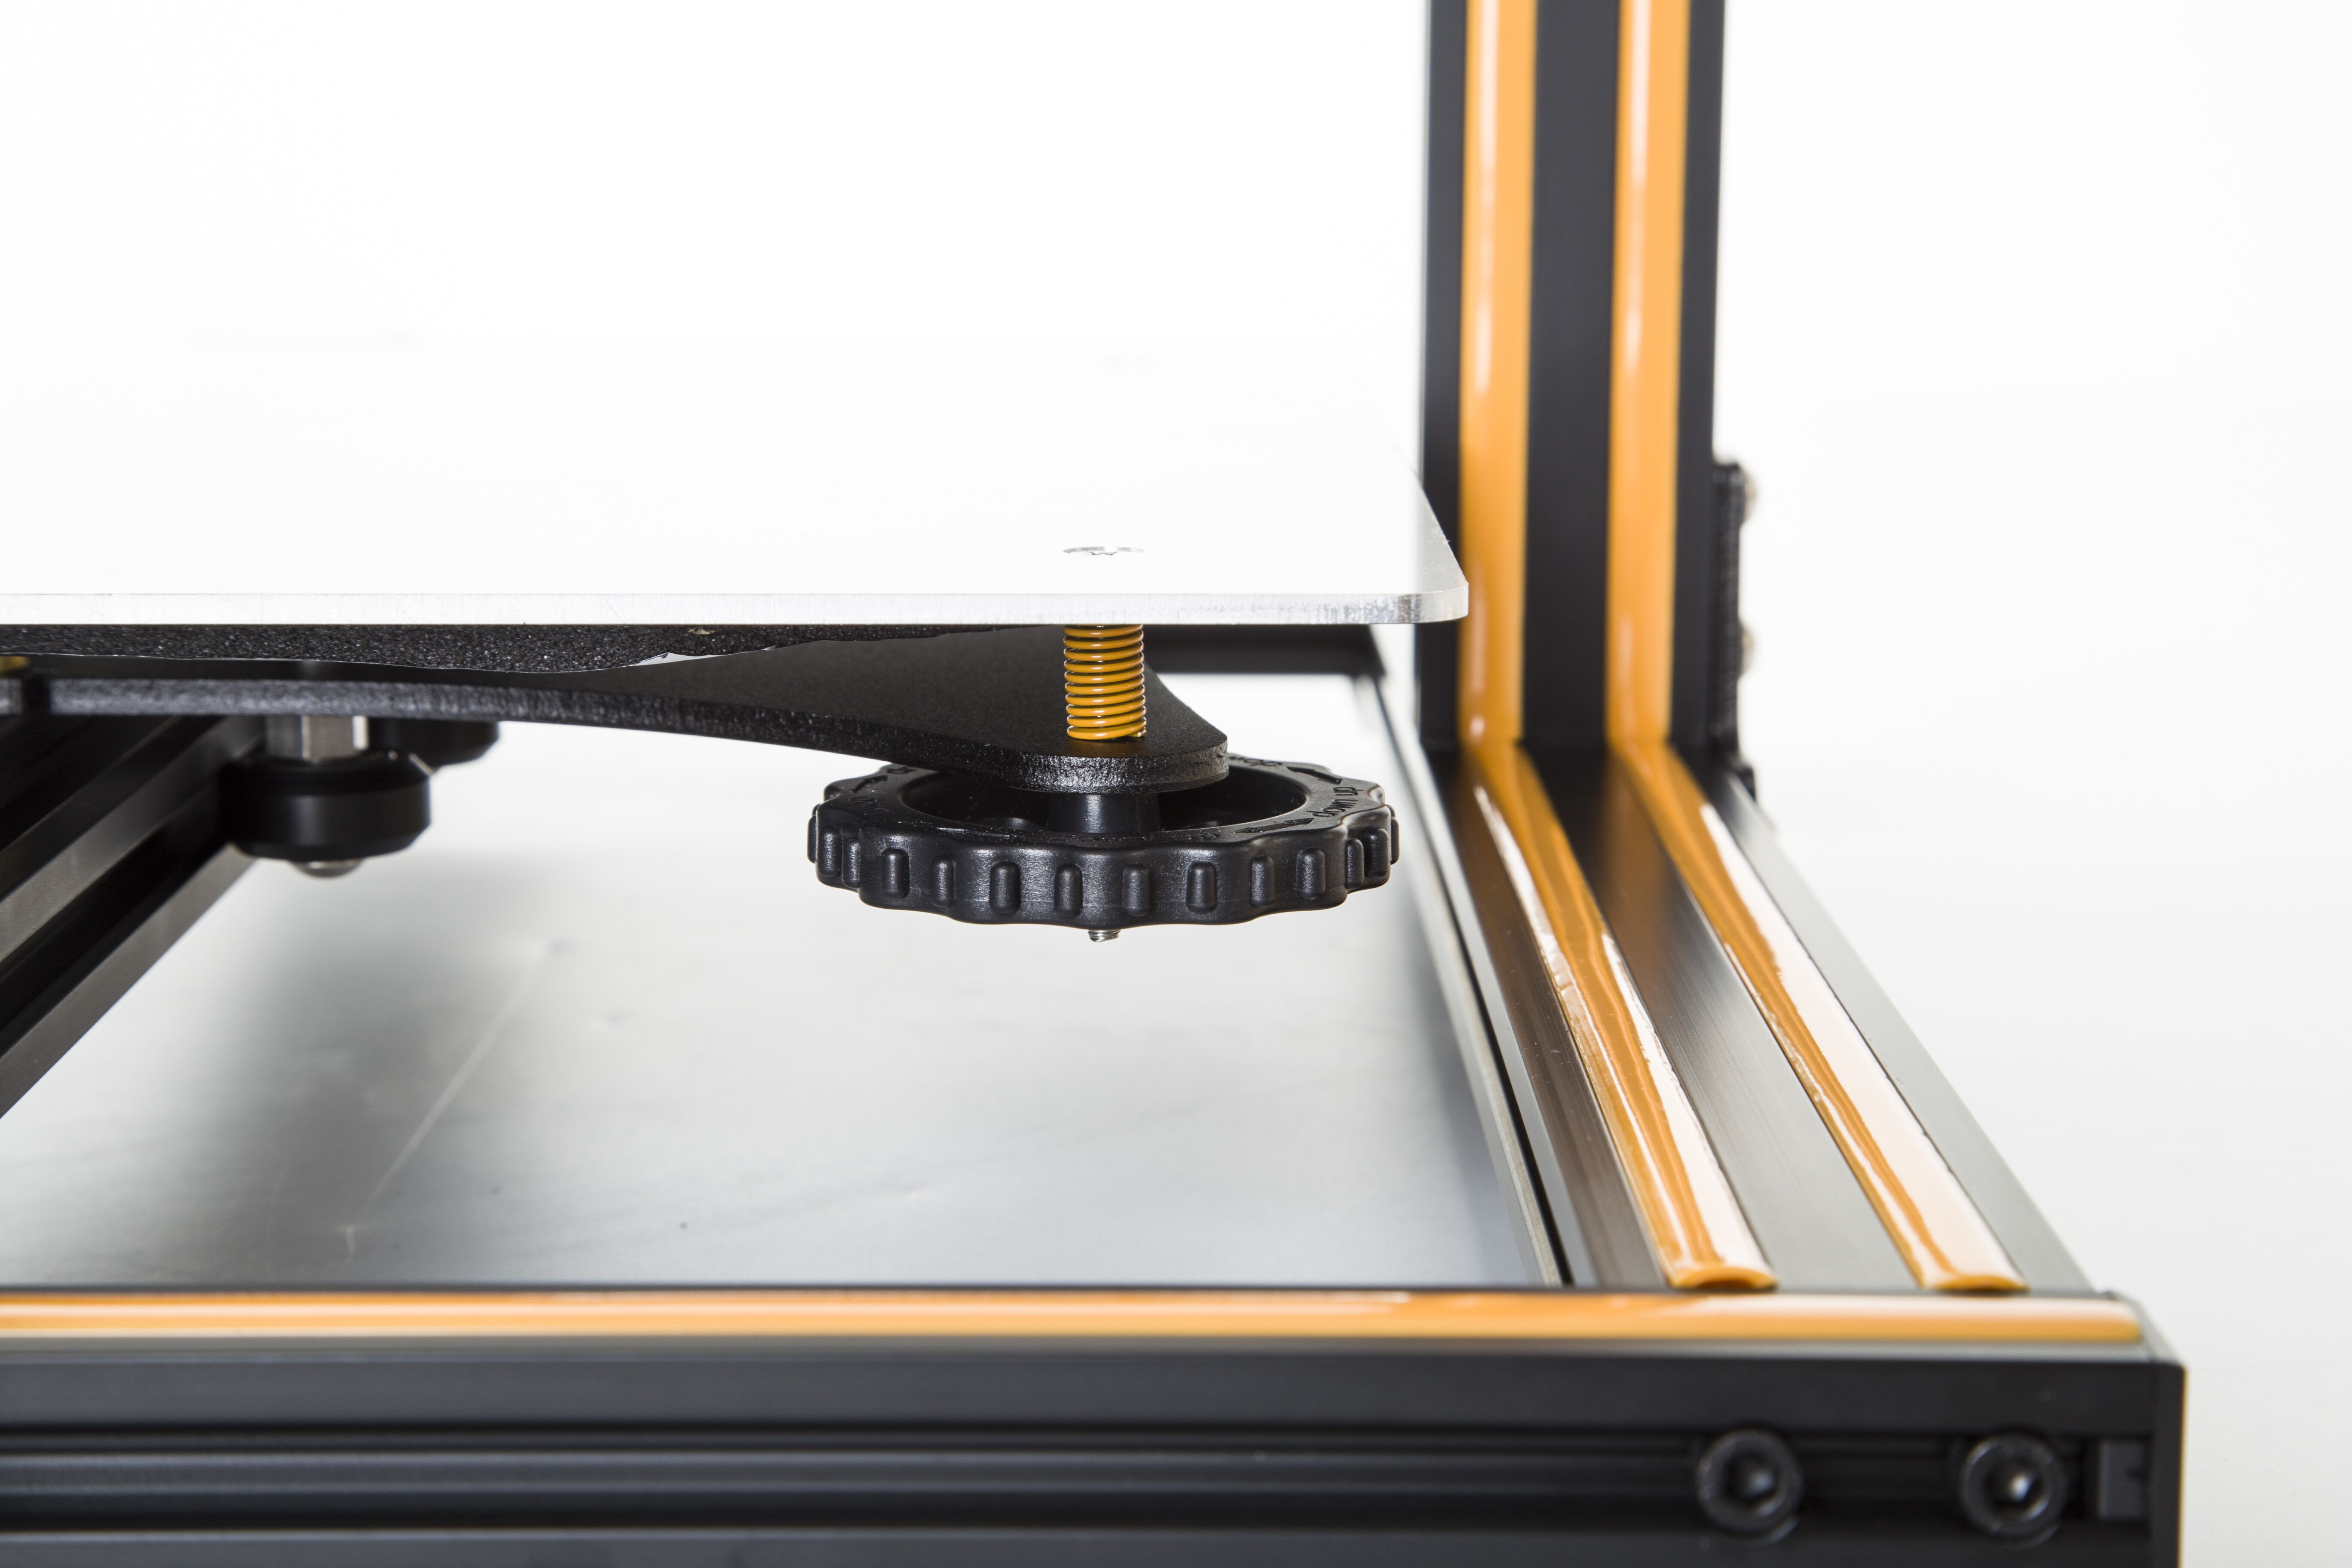 Creality 3D® CR-10 DIY 3D Printer Kit 300*300*400mm Printing Size 1.75mm 0.4mm Nozzle 5